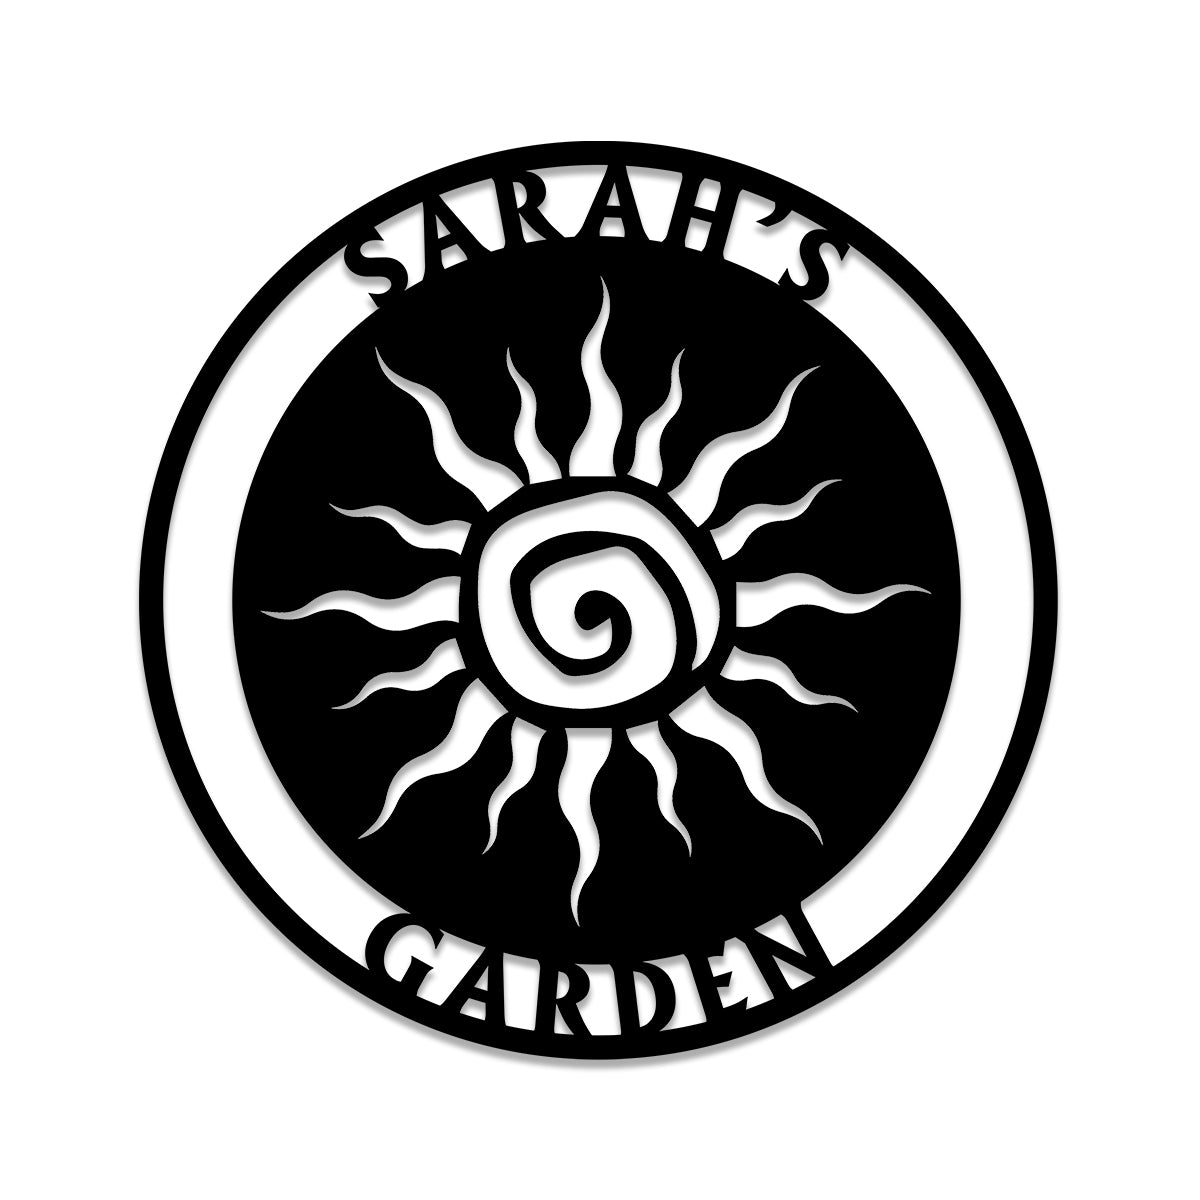 Personalized Metal Garden Sign, Garden Stake, Home Decor